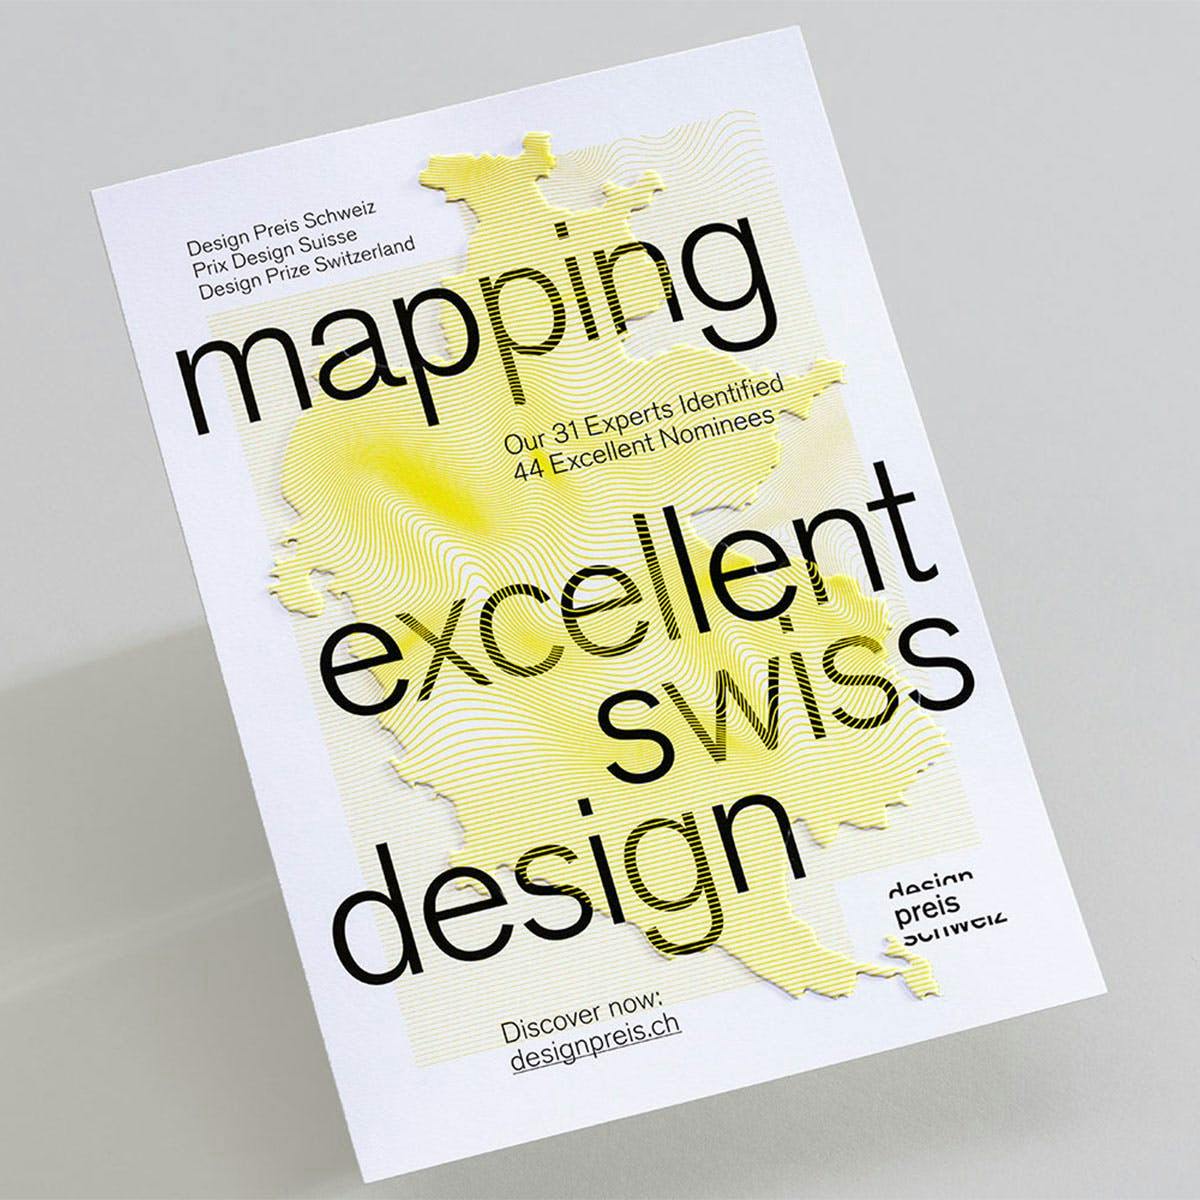 Nominee Design Price Switzerland 2015